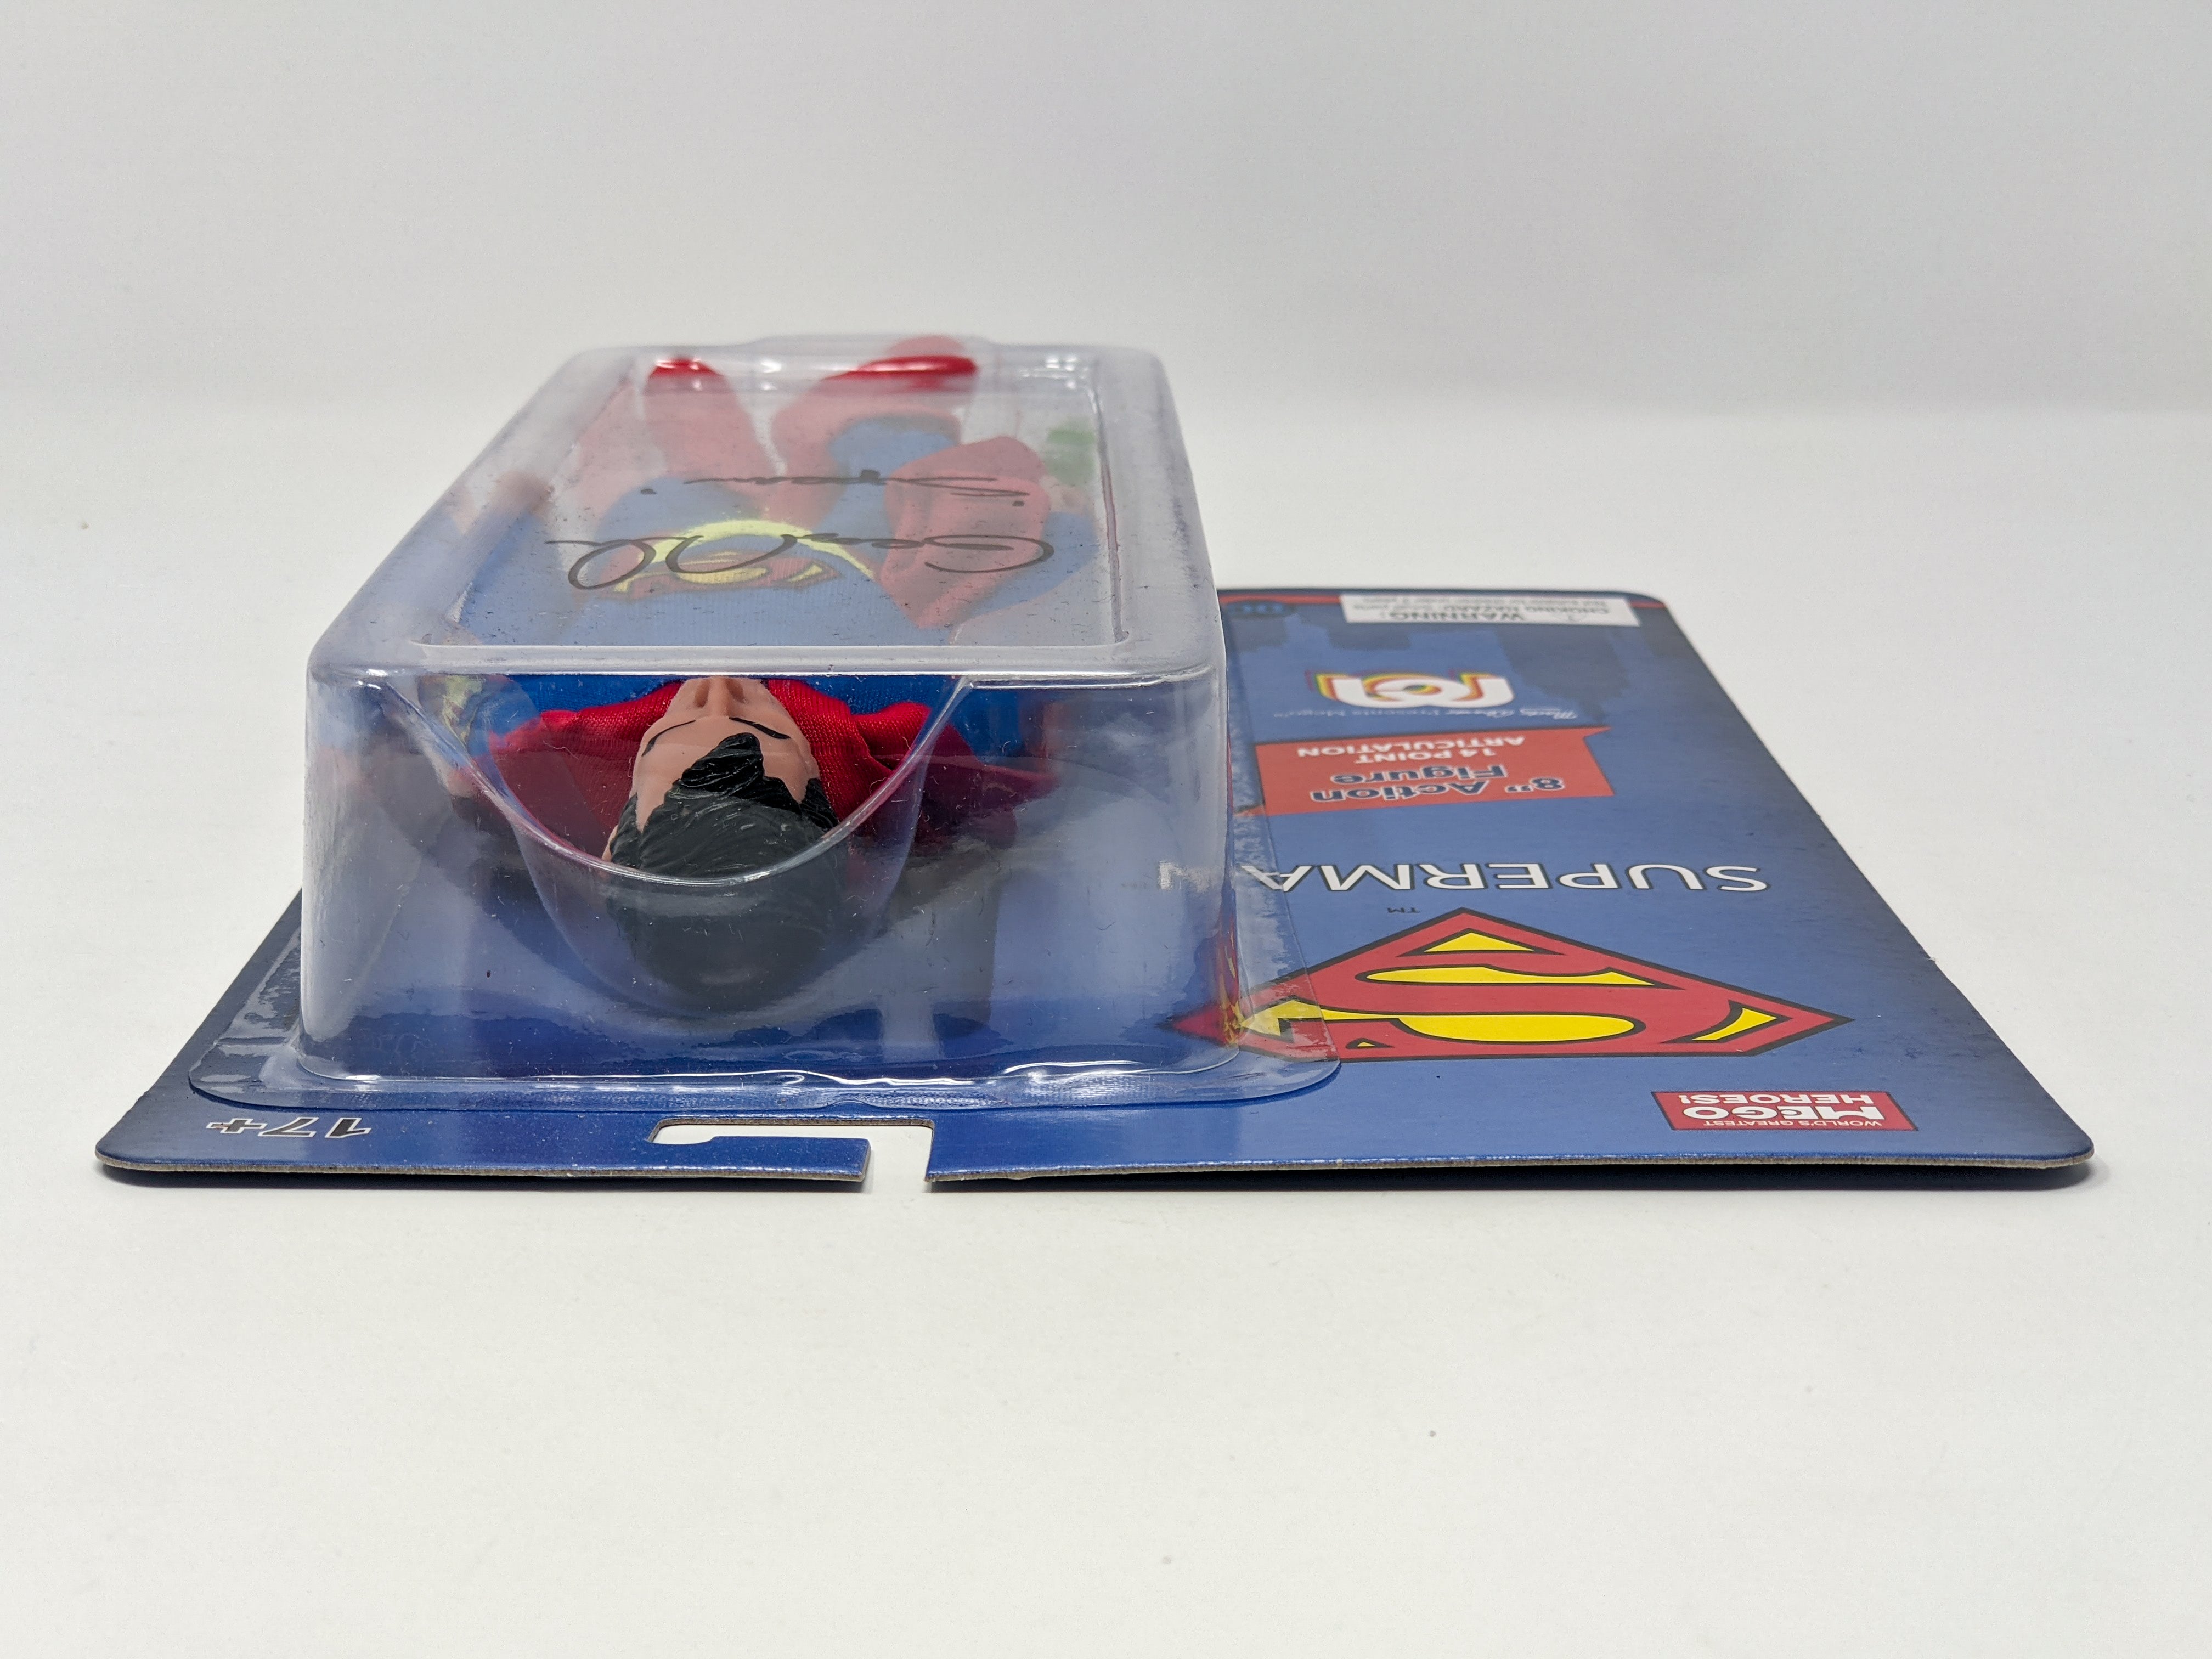 George Newbern DC Superman Signed Mego Action Figure JSA Certified Autograph GalaxyCon